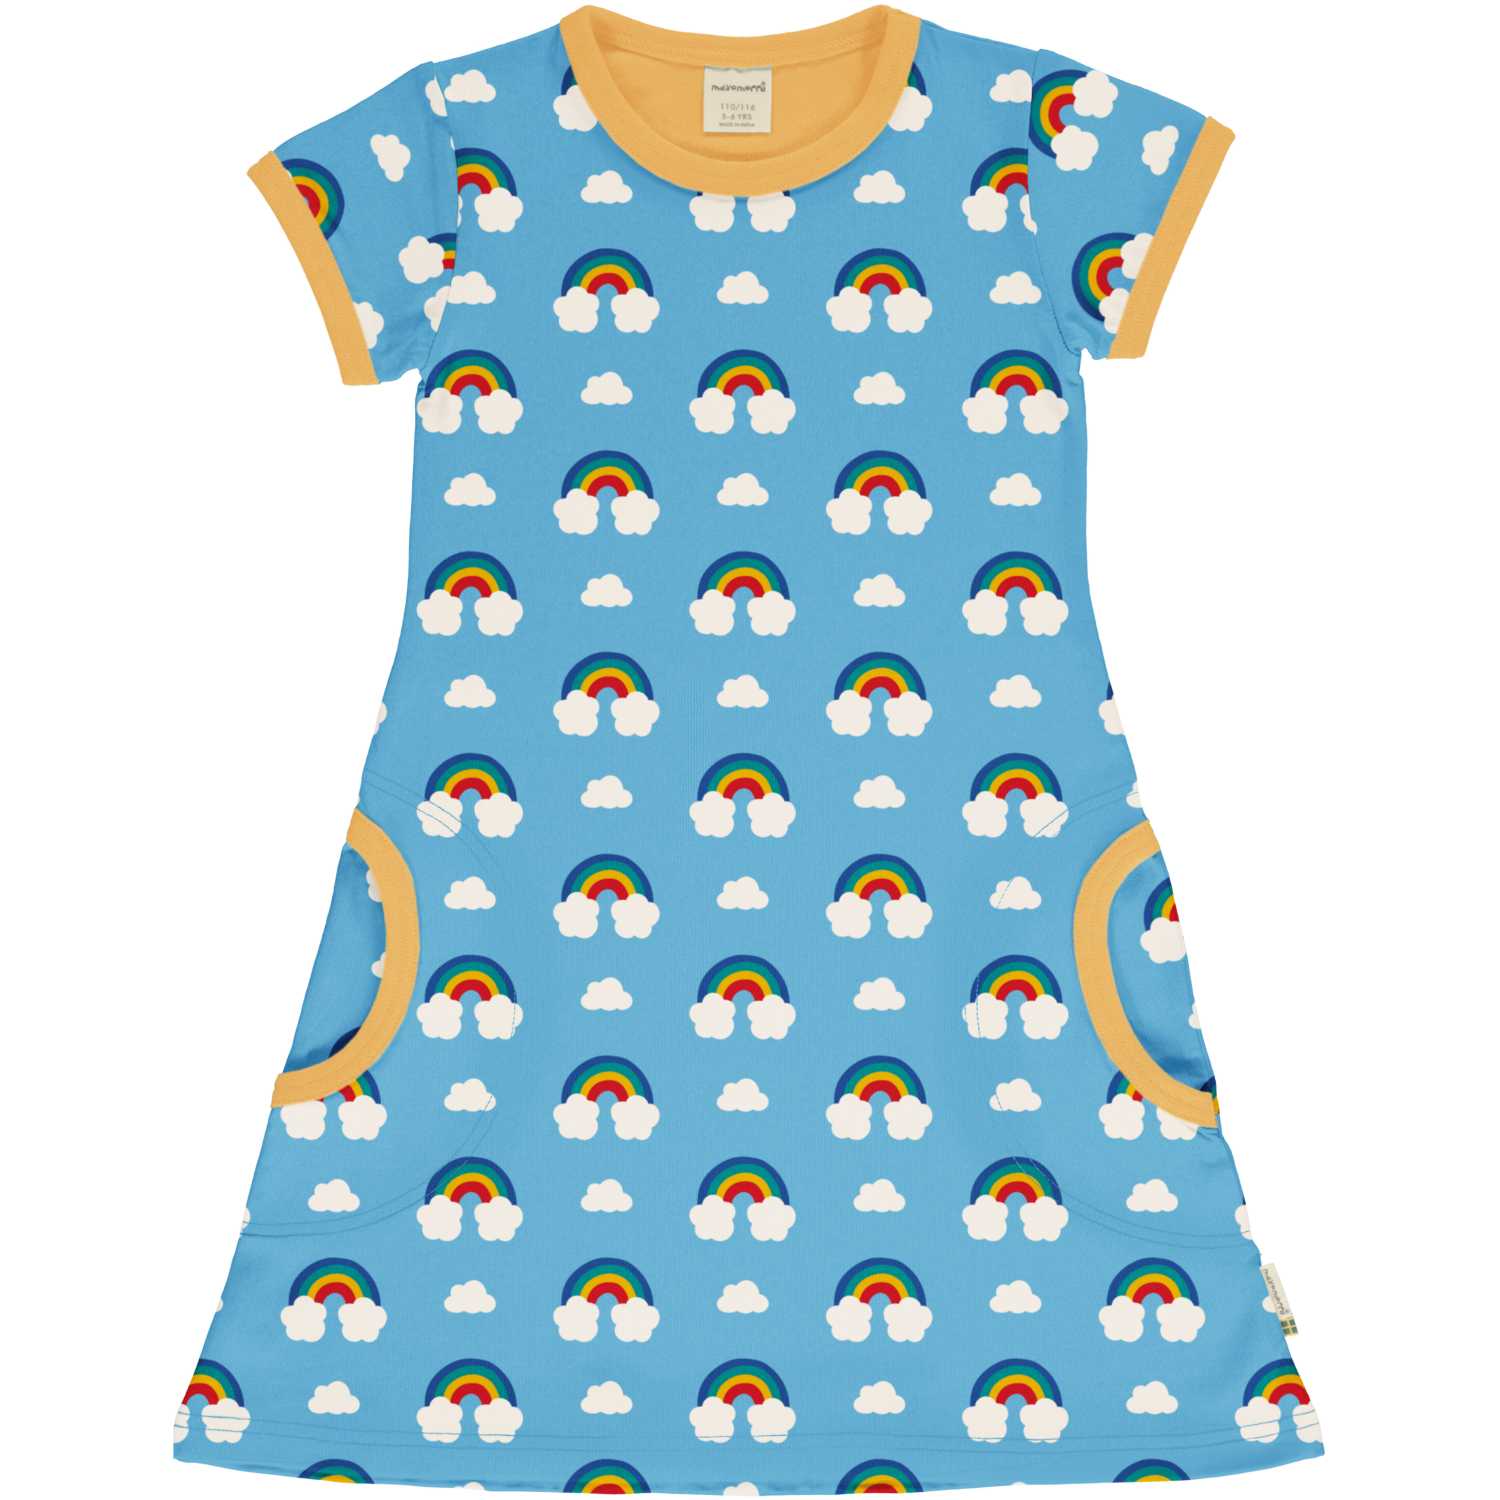 Maxomorra Rainbow Pocket Dress Ss24 Clothing 3-4YRS / Blue,5-6YRS / Blue,7-8YRS / Blue,9-10YRS / Blue,1-2 YRS / Blue